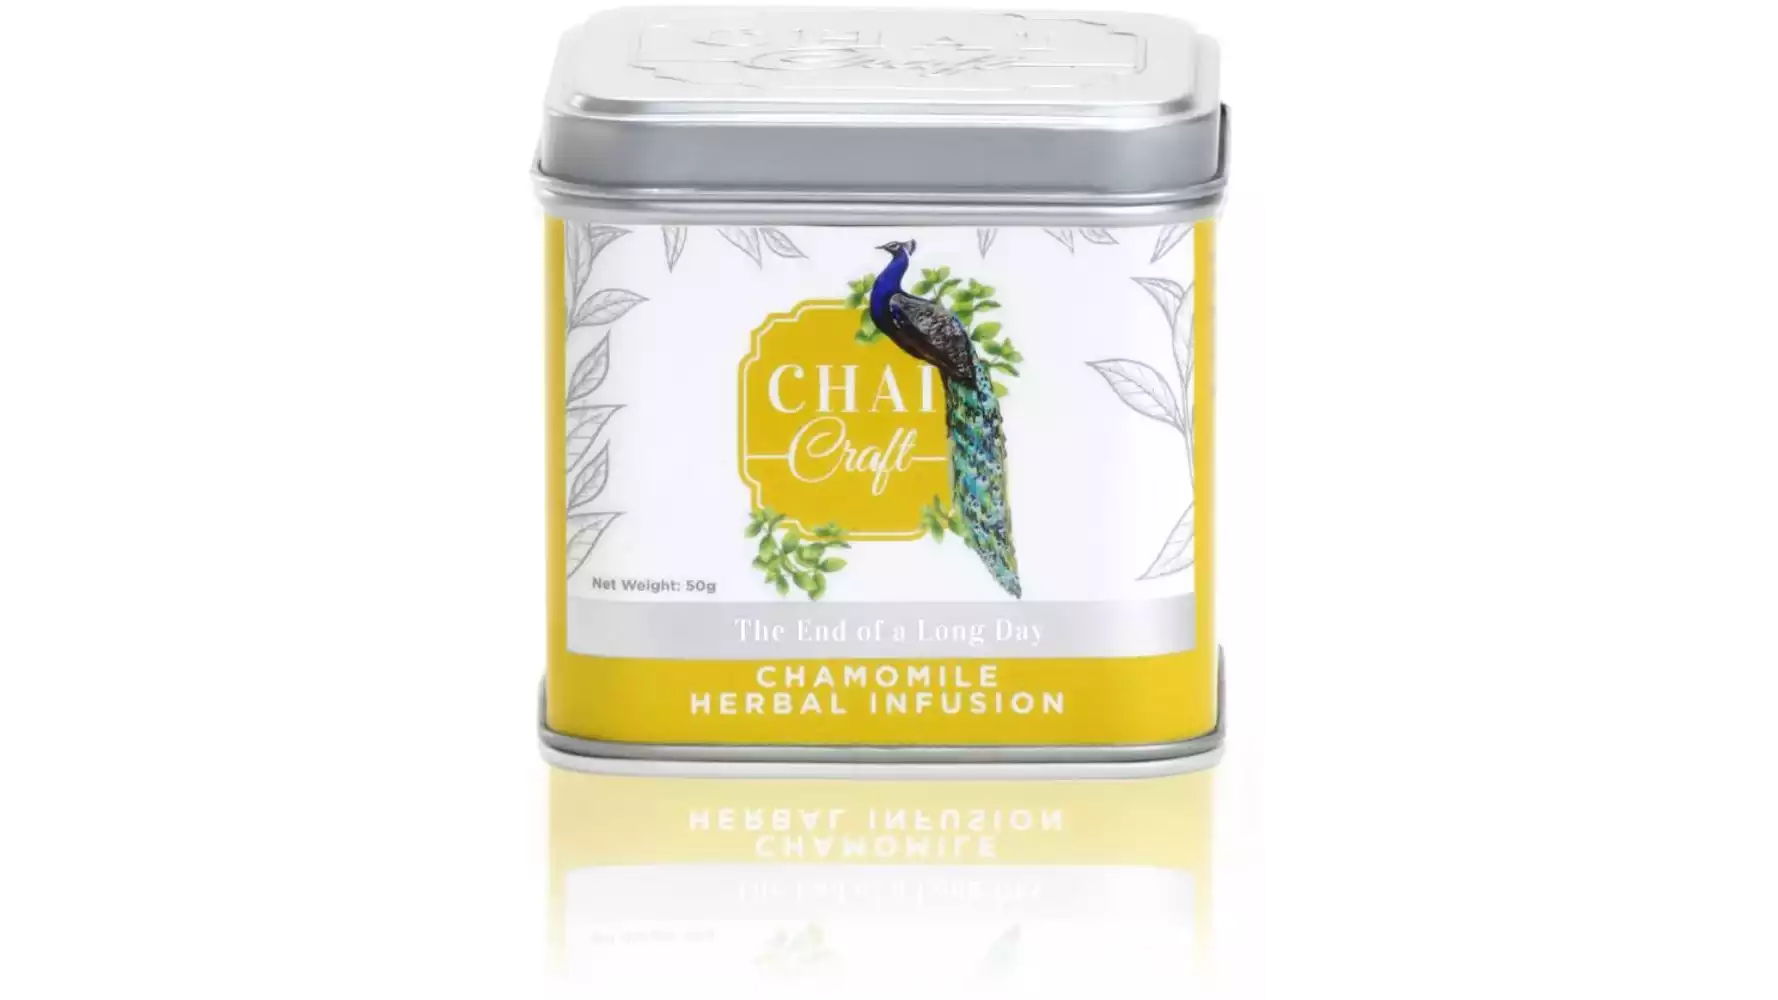 Chai Craft Chamomile Herbal Infusion Tea (50g)